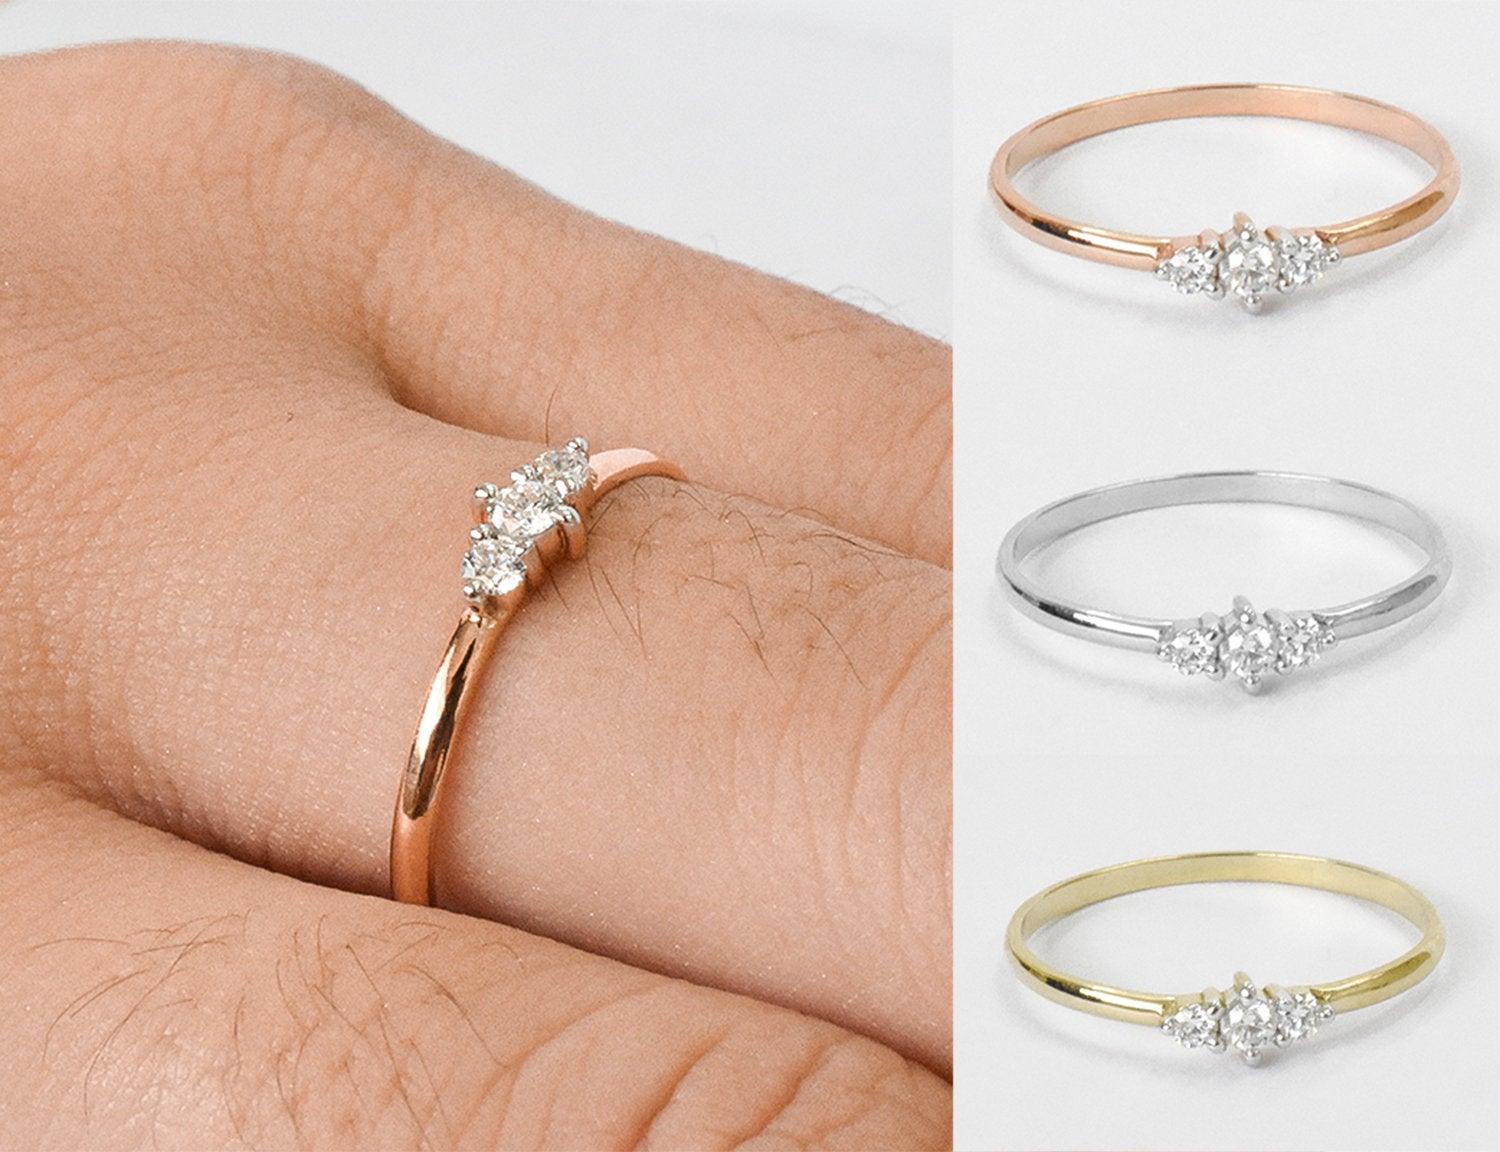 For Sale:  18k Gold Three Stone Diamond Engagement Ring Trio Diamond Ring 6